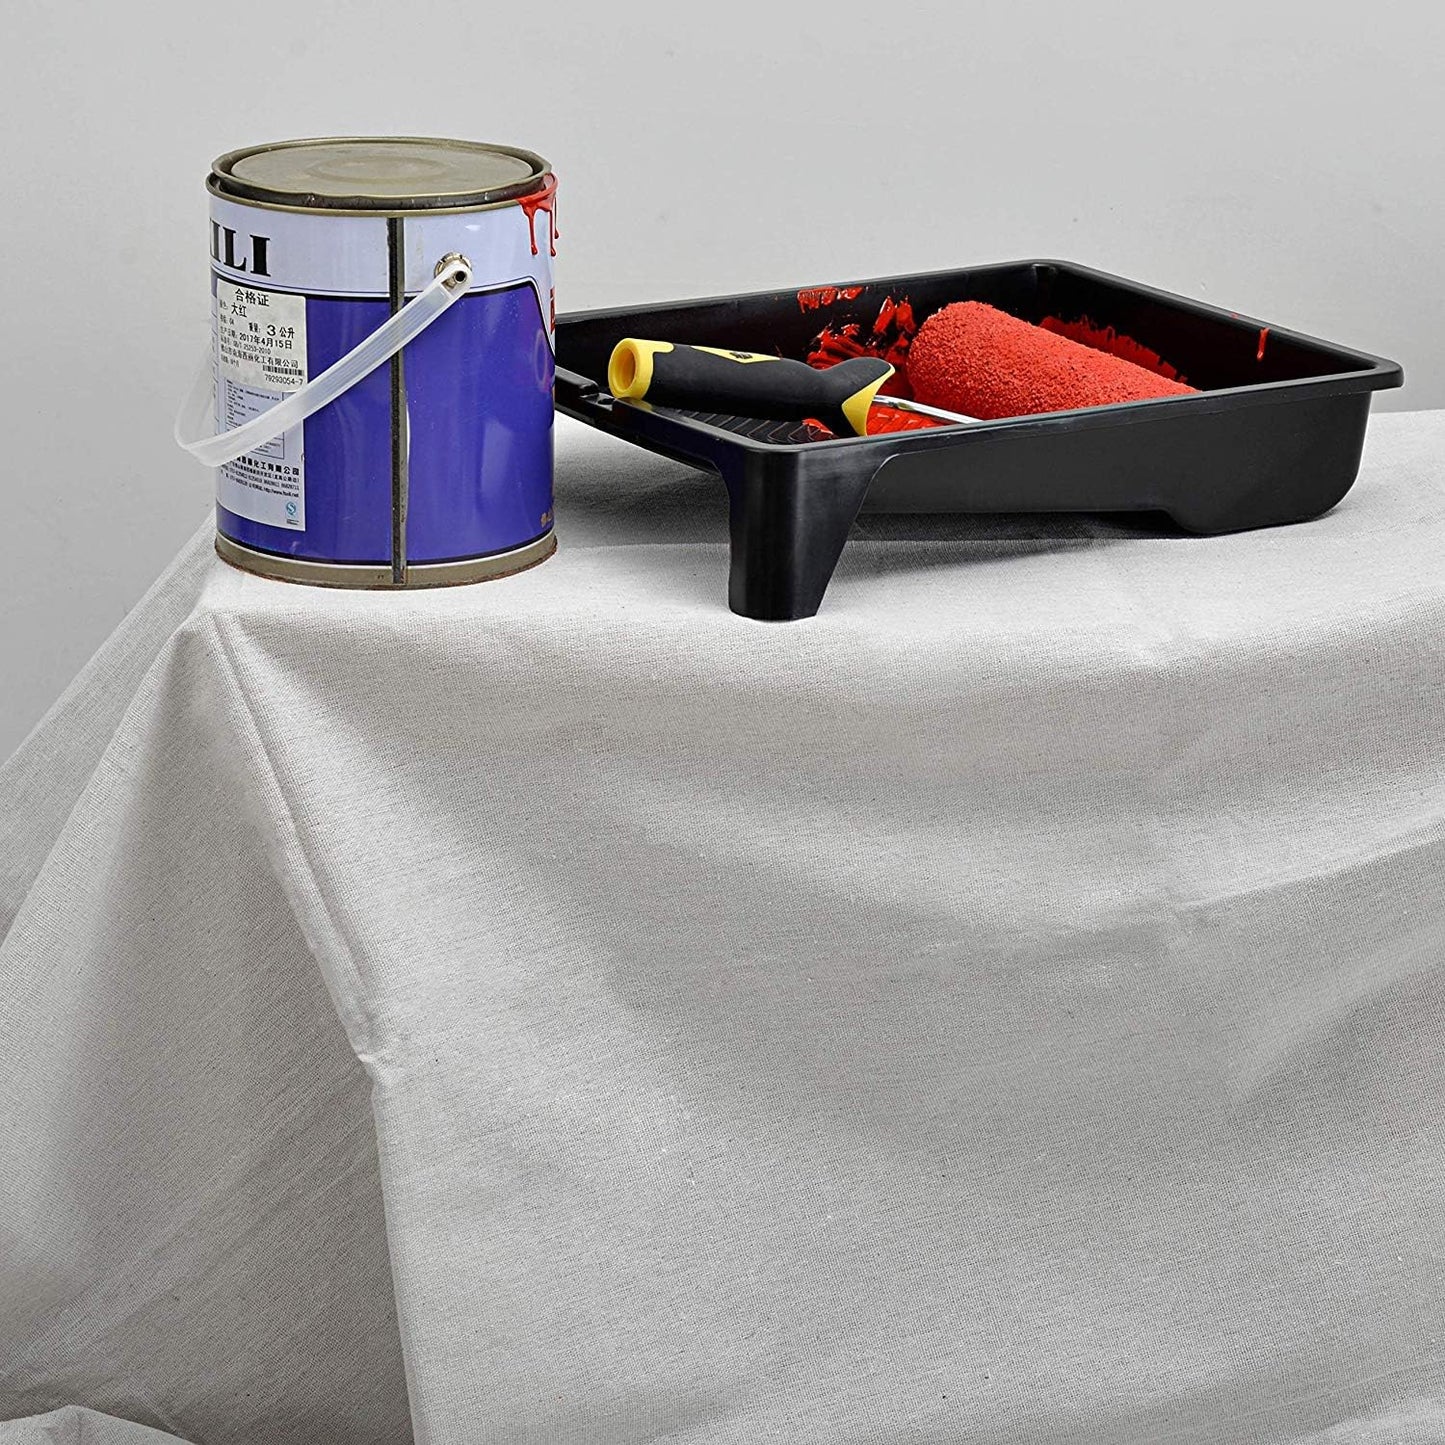 Lona protectora de lienzo de 2.7m x 3.6m  para pintar, cubrir,limpiar, etc, reusable y lavable